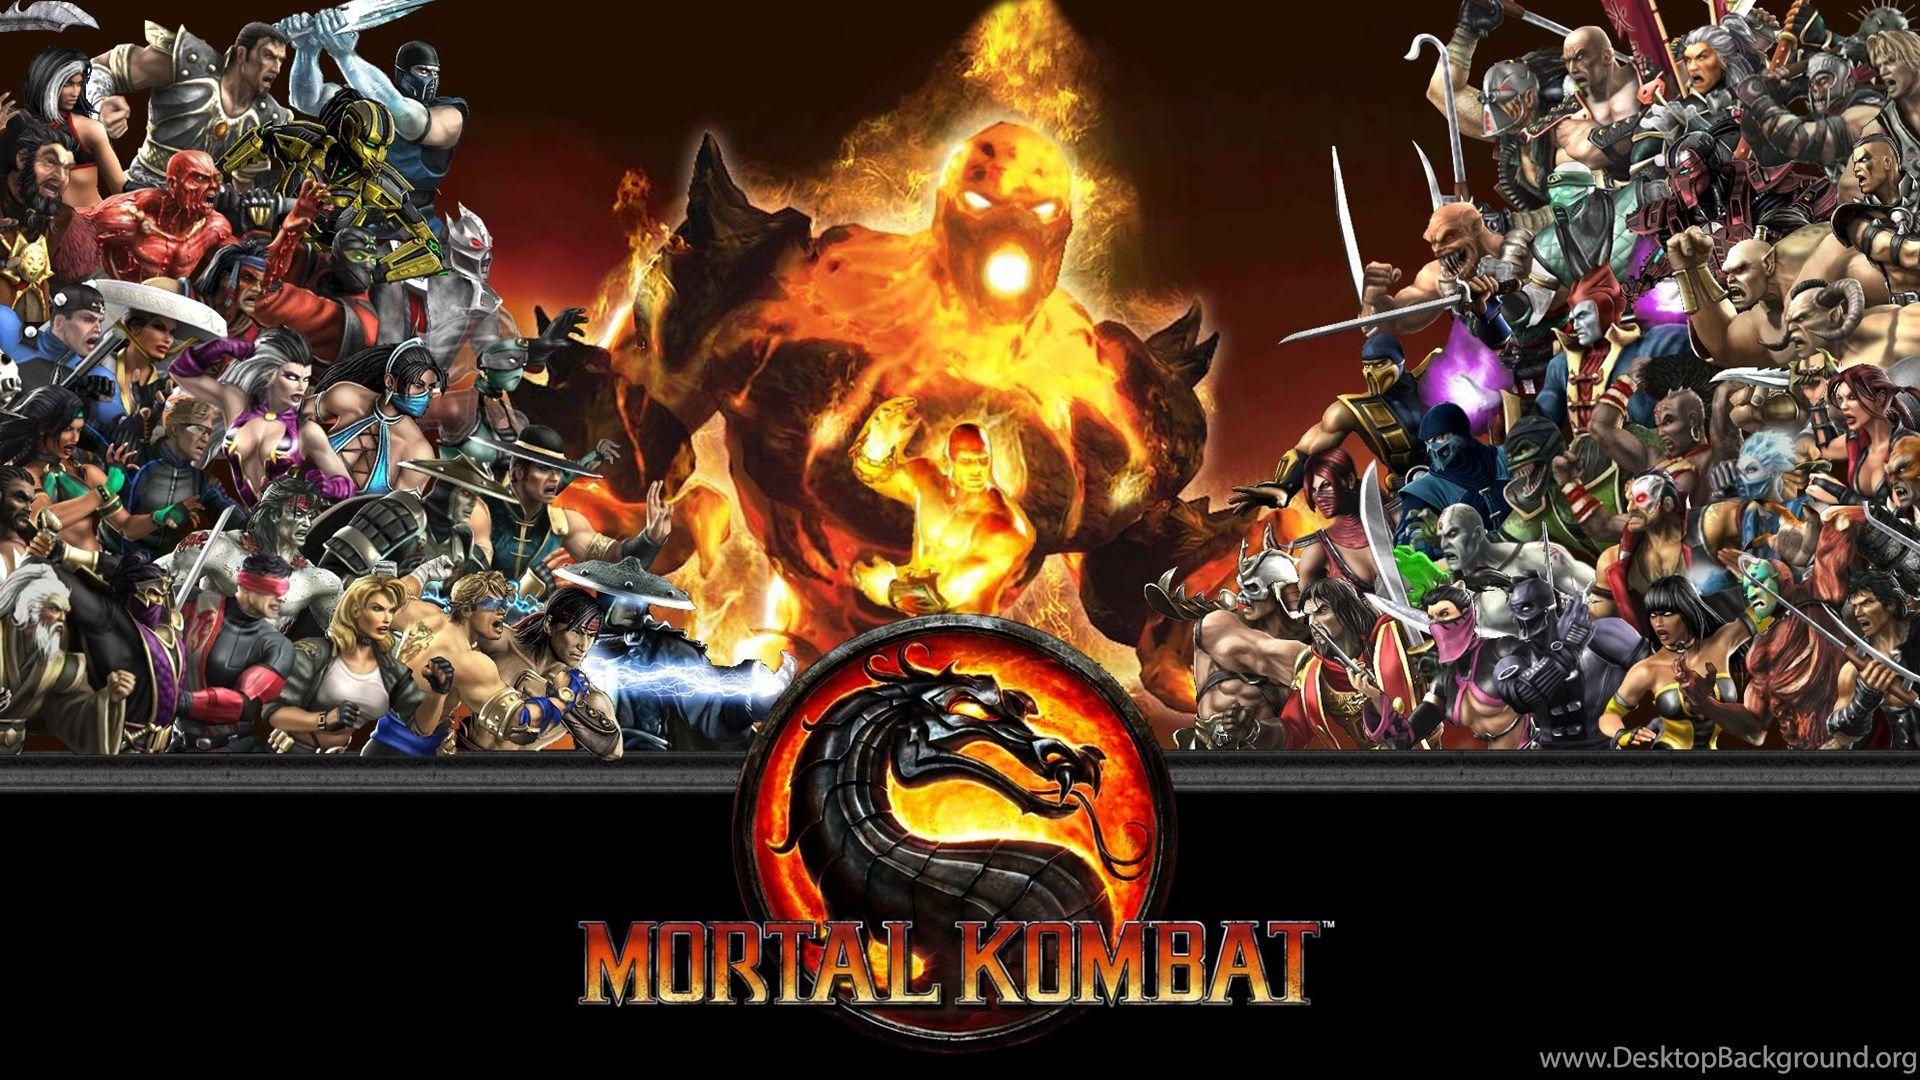 mortal kombat armageddon pc with multiplayer